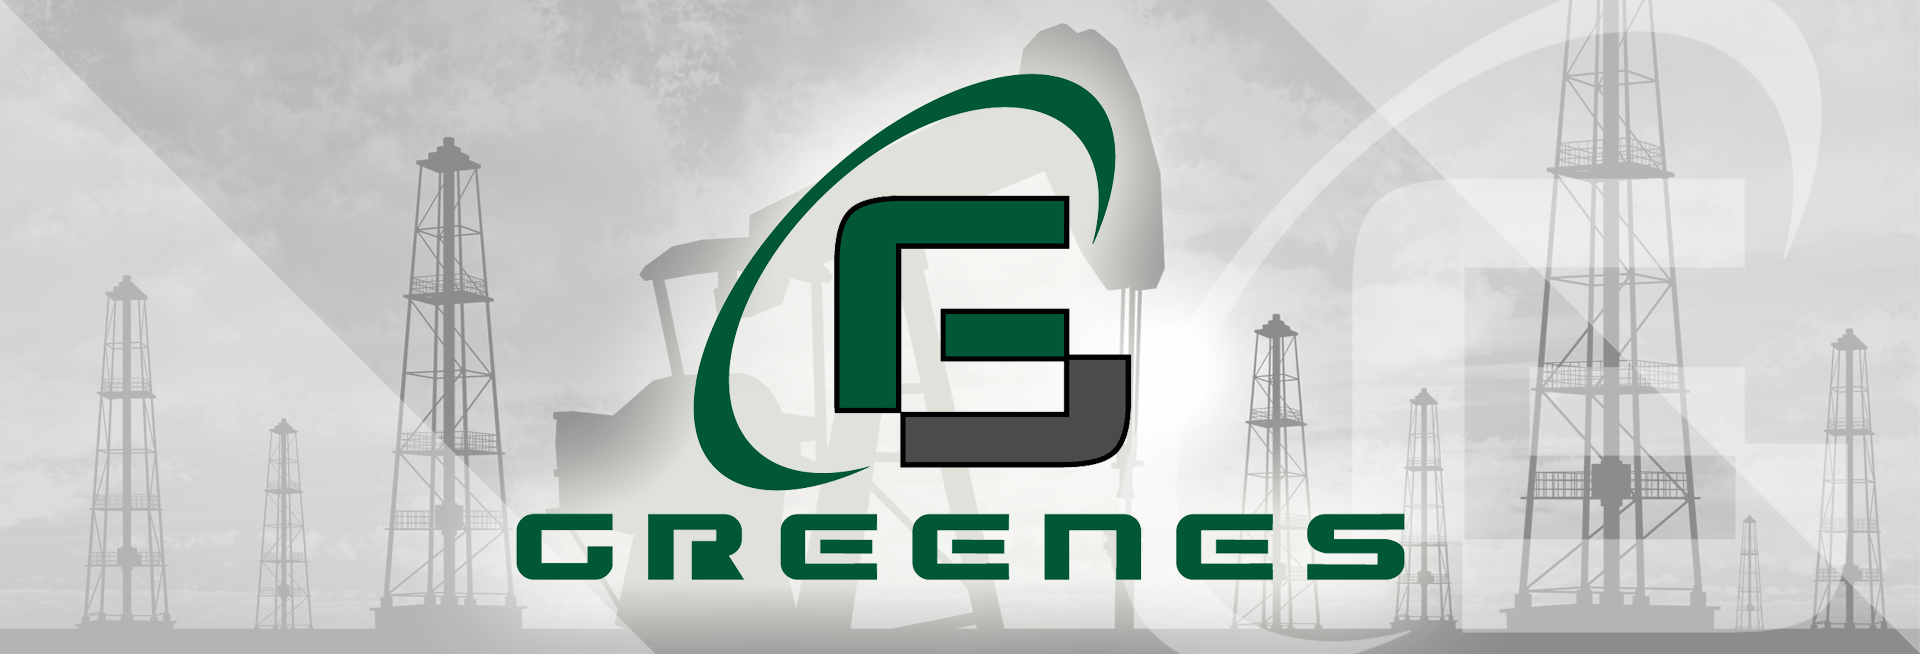 Greenes-Energy-Corp_Homepage-Image-v4